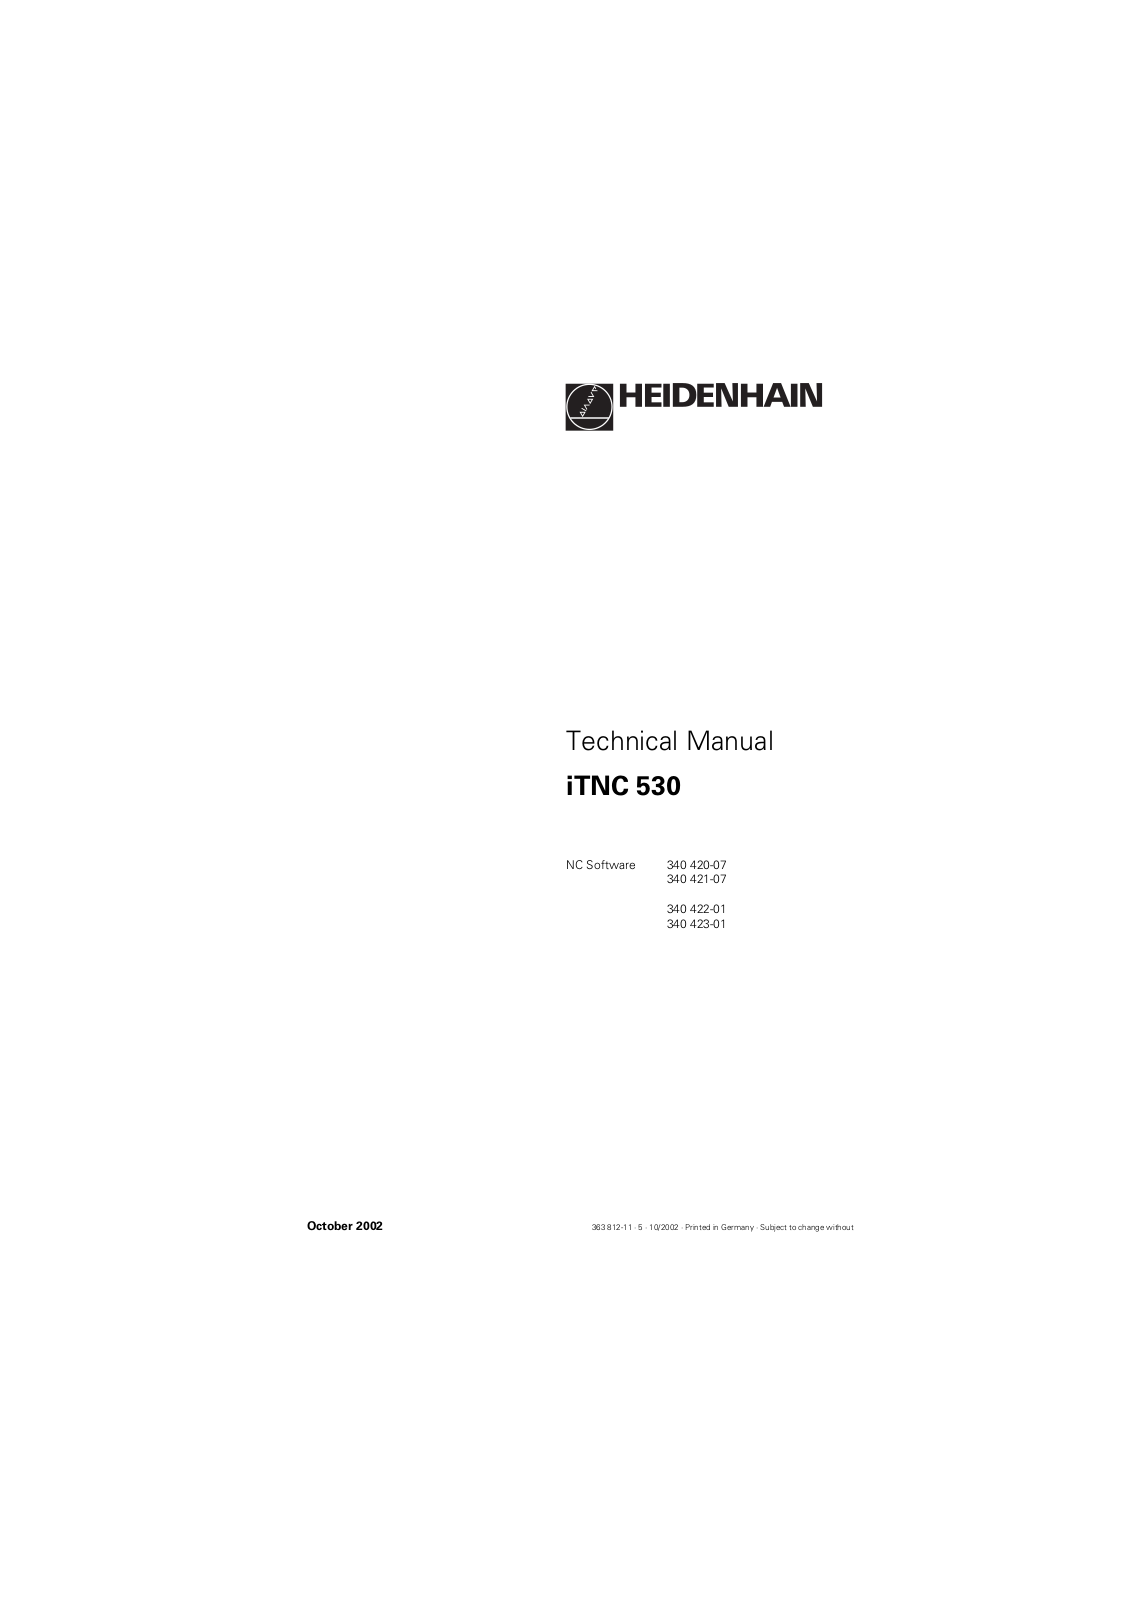 HEIDENHAIN iTNC 530 Technical Manual